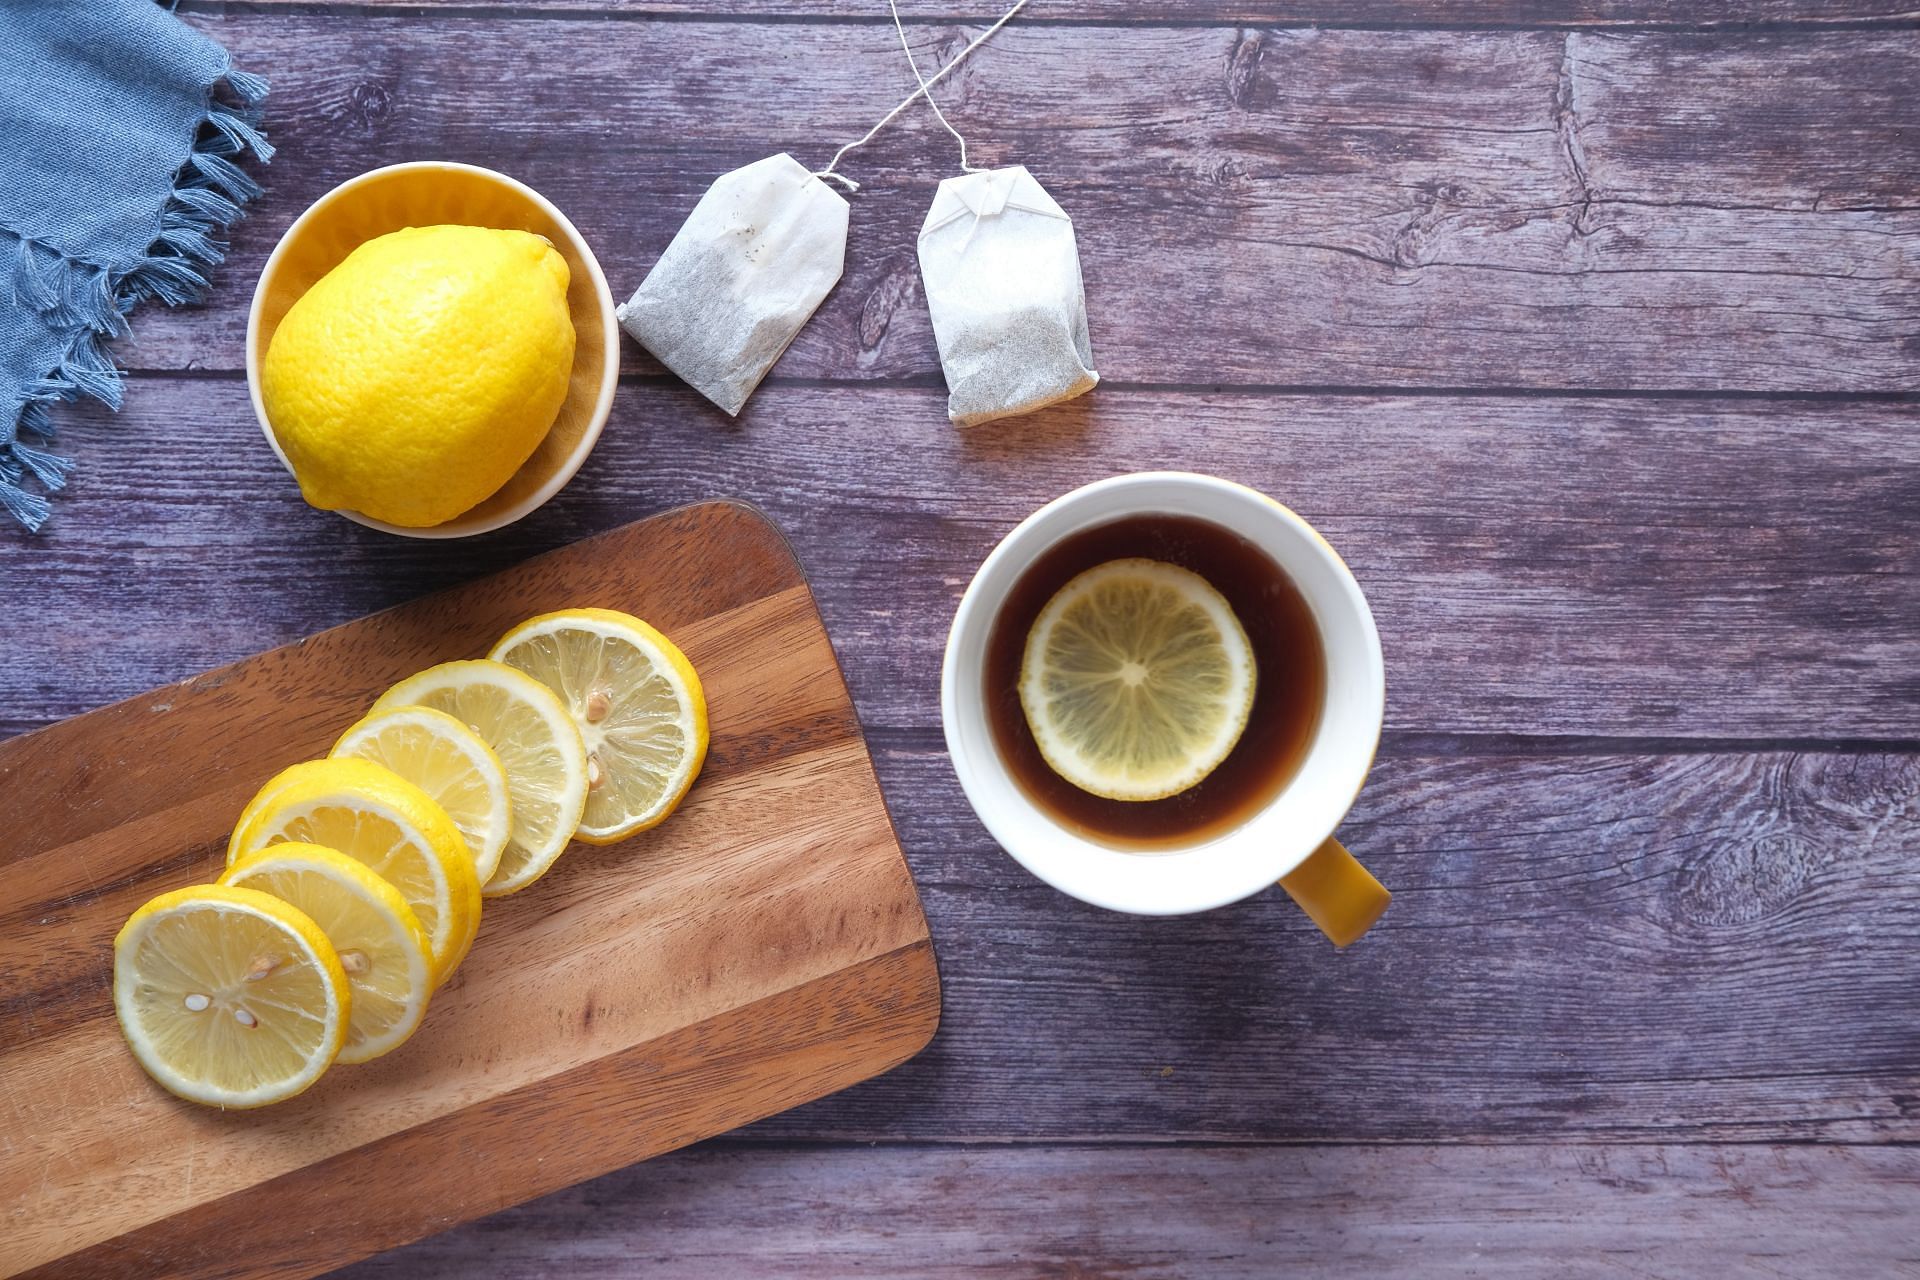 Lemon coffee goes viral on TikTok for alleged weight-loss benefits (Image via Unsplash/Towfiqu Barbhuiya)